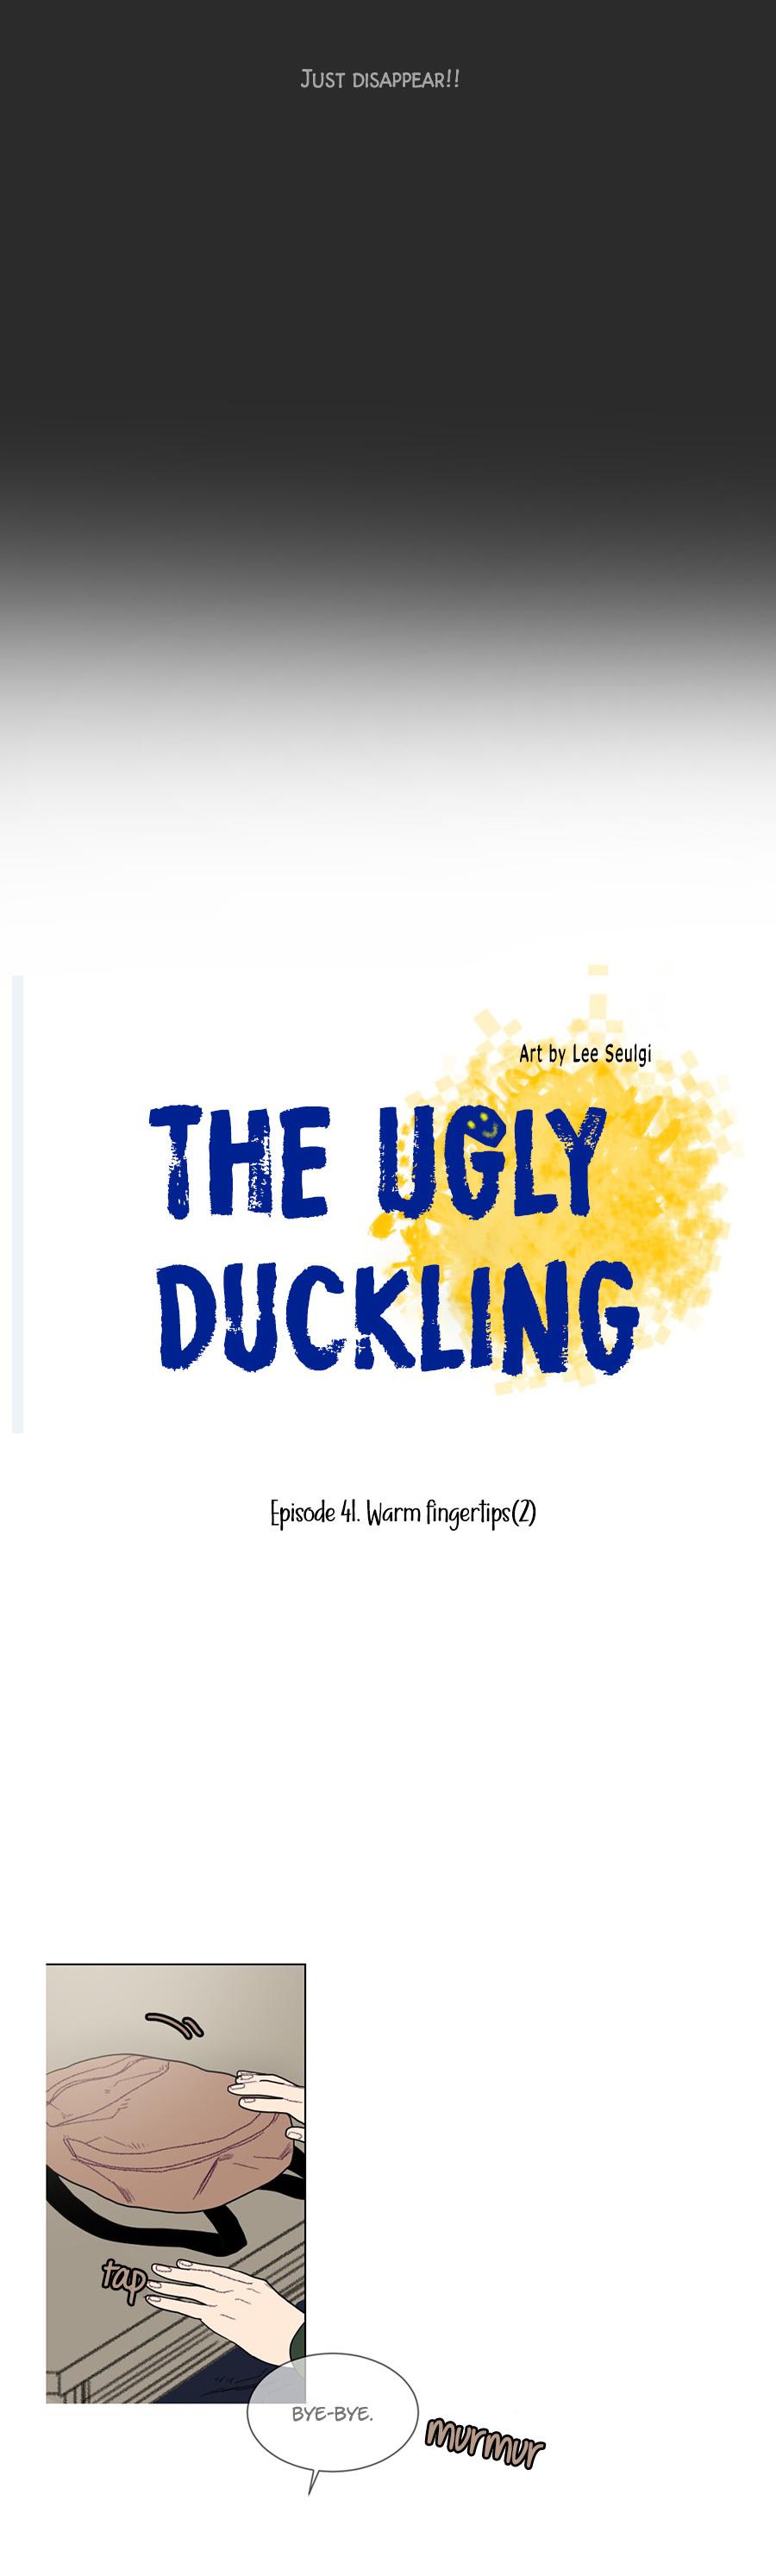 Ugly Duckling - episode 41 - 2